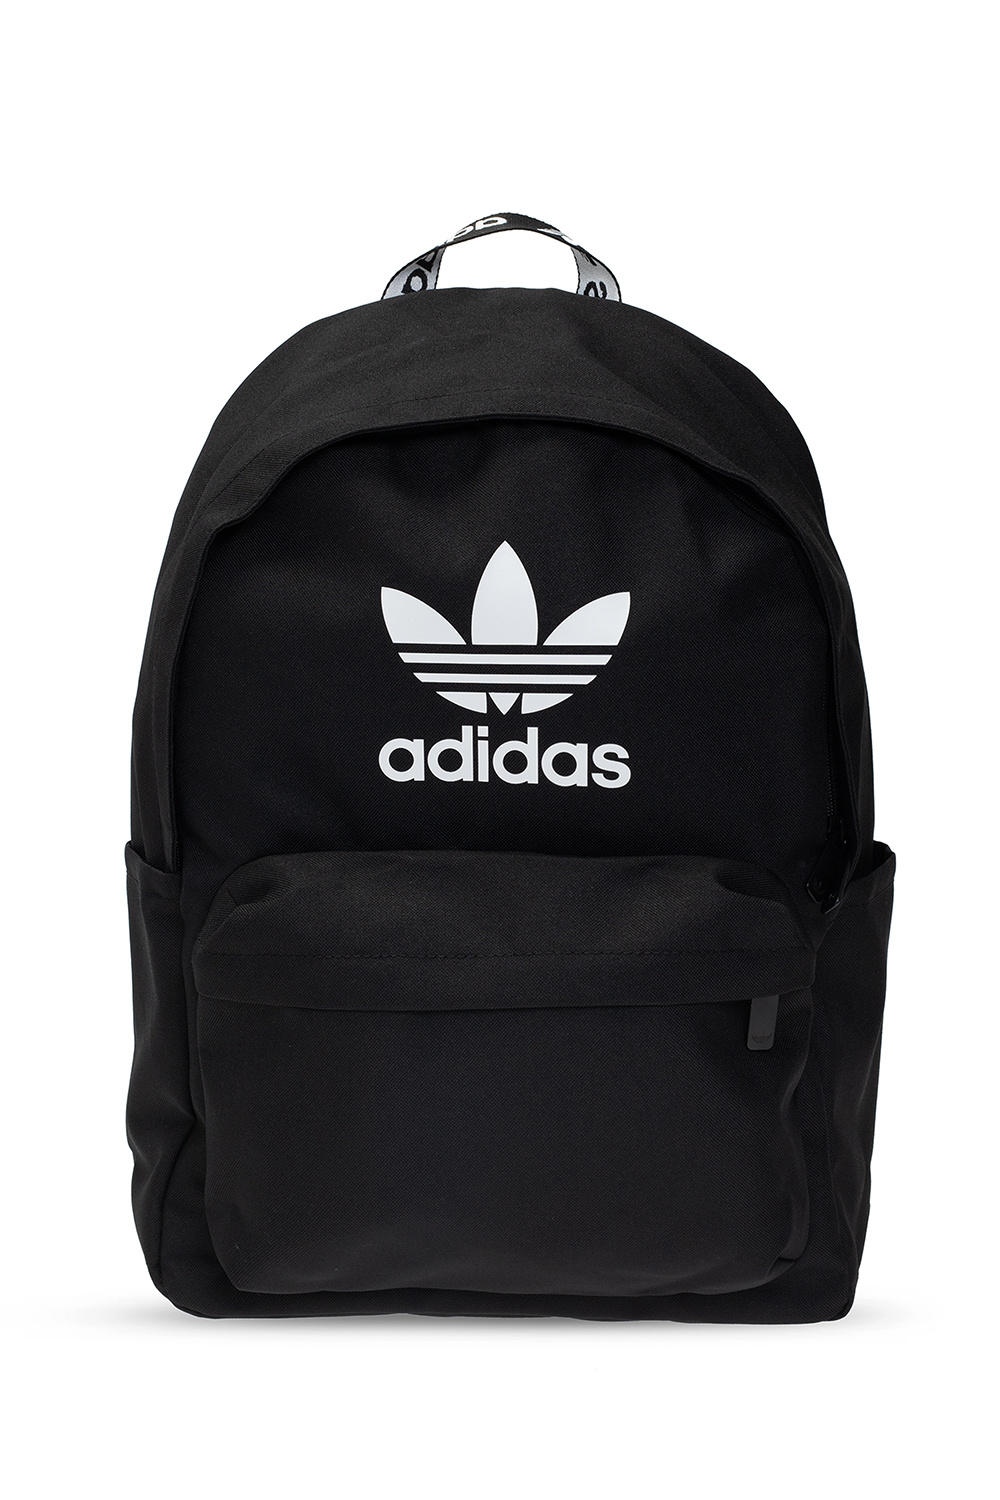 ADIDAS Originals Backpack with logo | Women's Bags | Vitkac